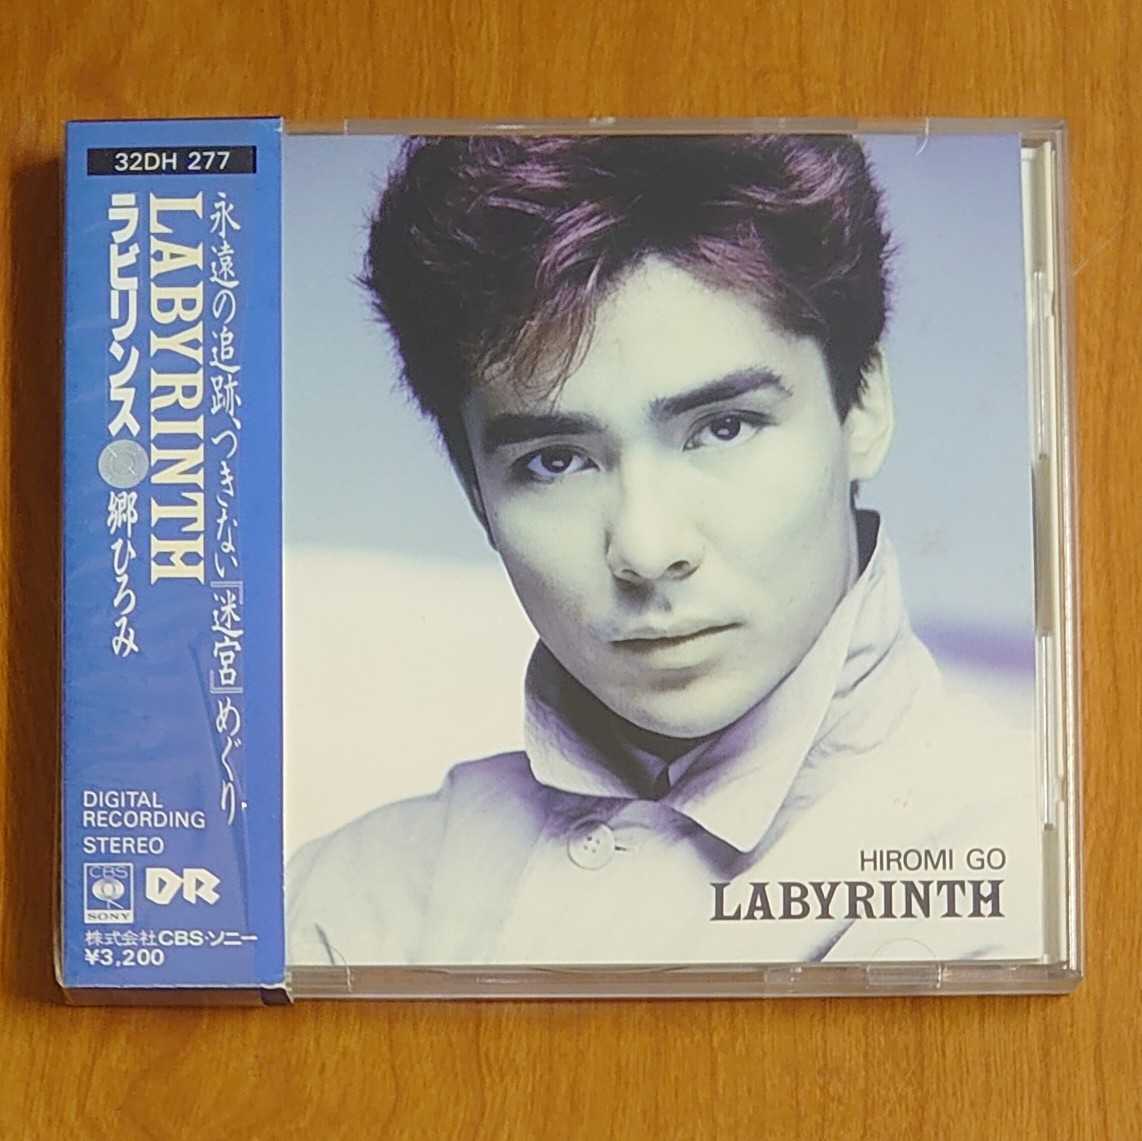  Go Hiromi LABYRINTH CD 1985 год старый стандарт налог надпись нет коробка с лентой...k-731/32DH277/hiromi go/ лабиринт / идол песня 